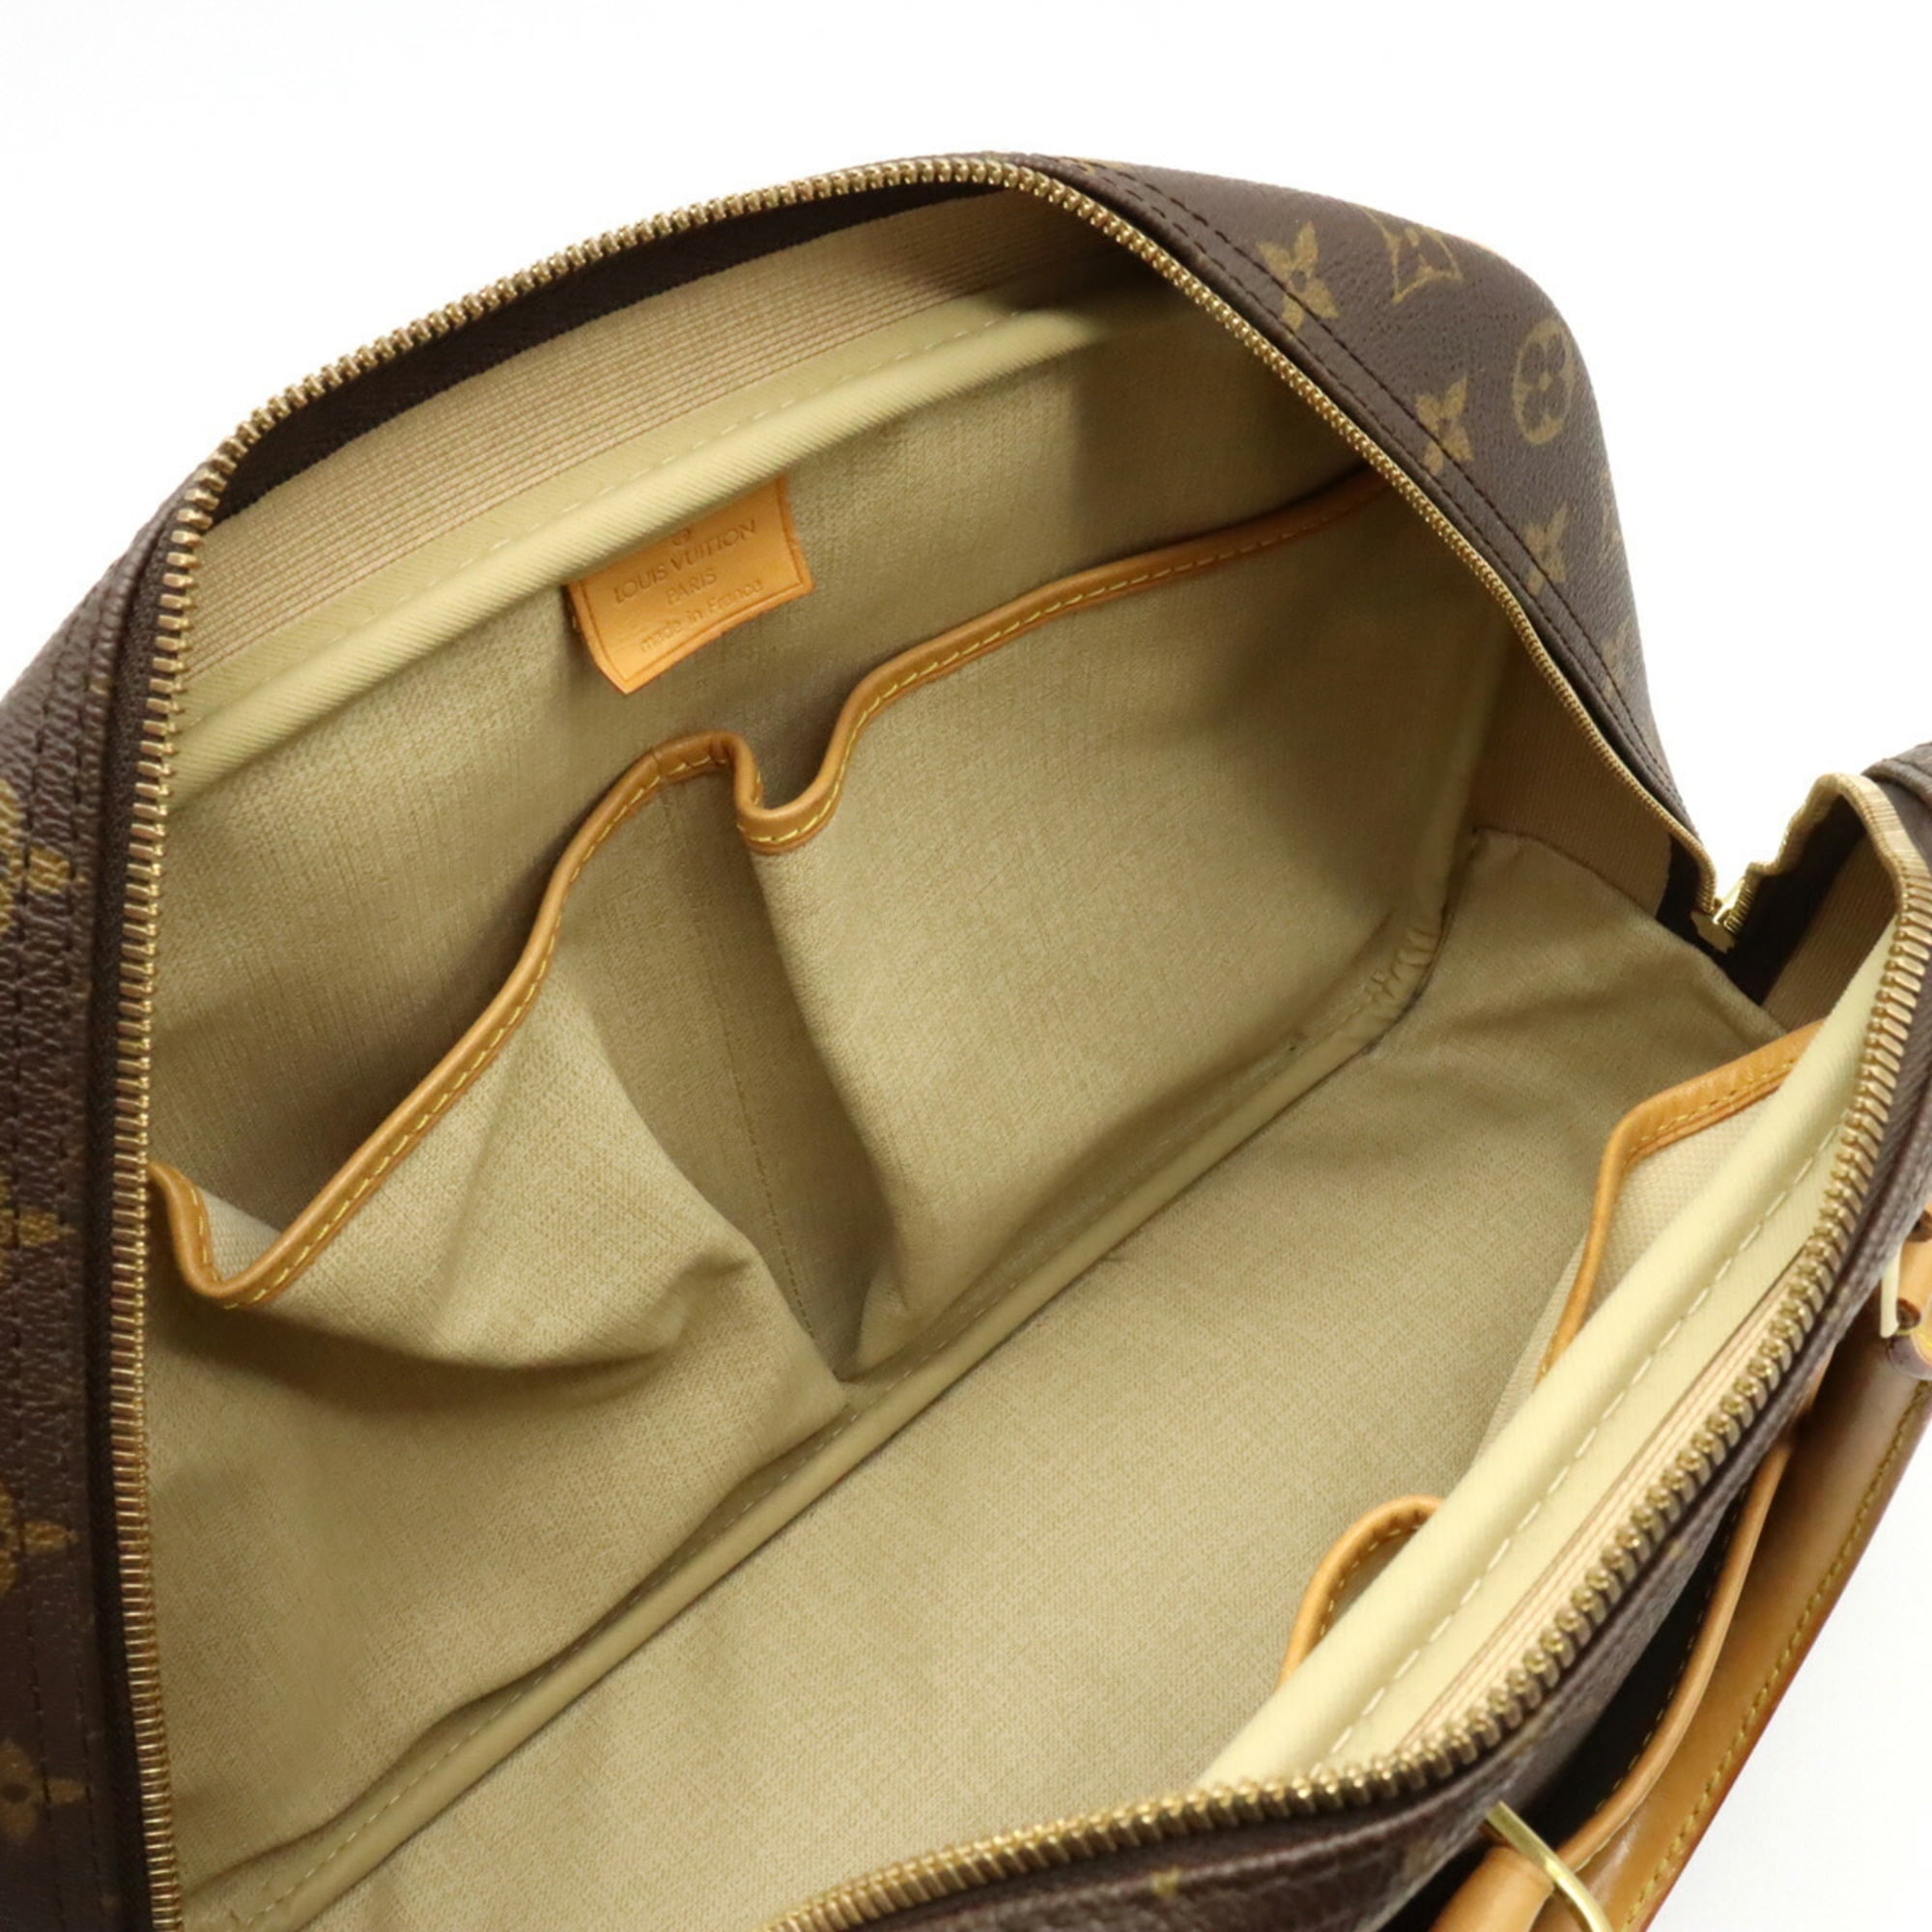 Buy [Bag] LOUIS VUITTON Louis Vuitton Monogram Bowling Vanity Deauville  Handbag Mini Boston Bag Travel Bag M47270 from Japan - Buy authentic Plus  exclusive items from Japan